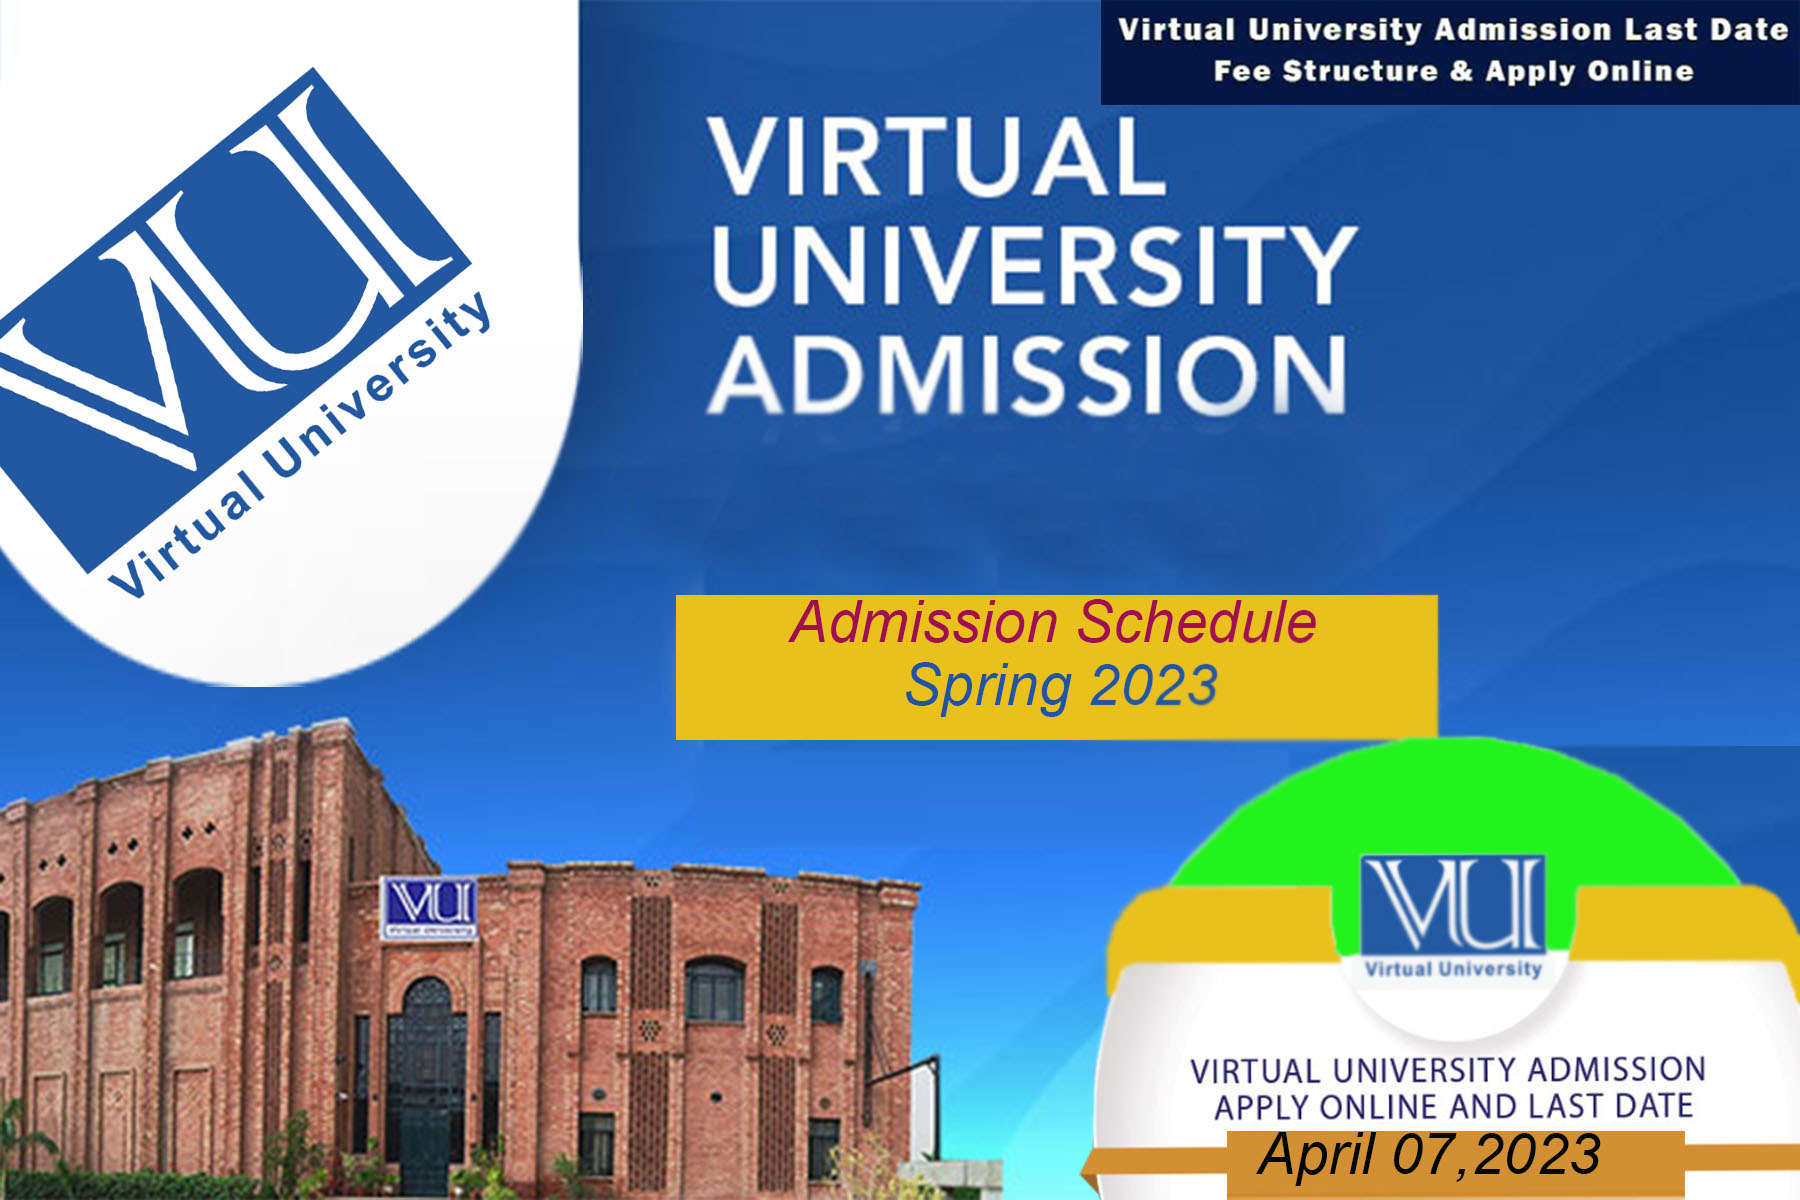 Virtual University of Pakistan - Pakistan (VU)